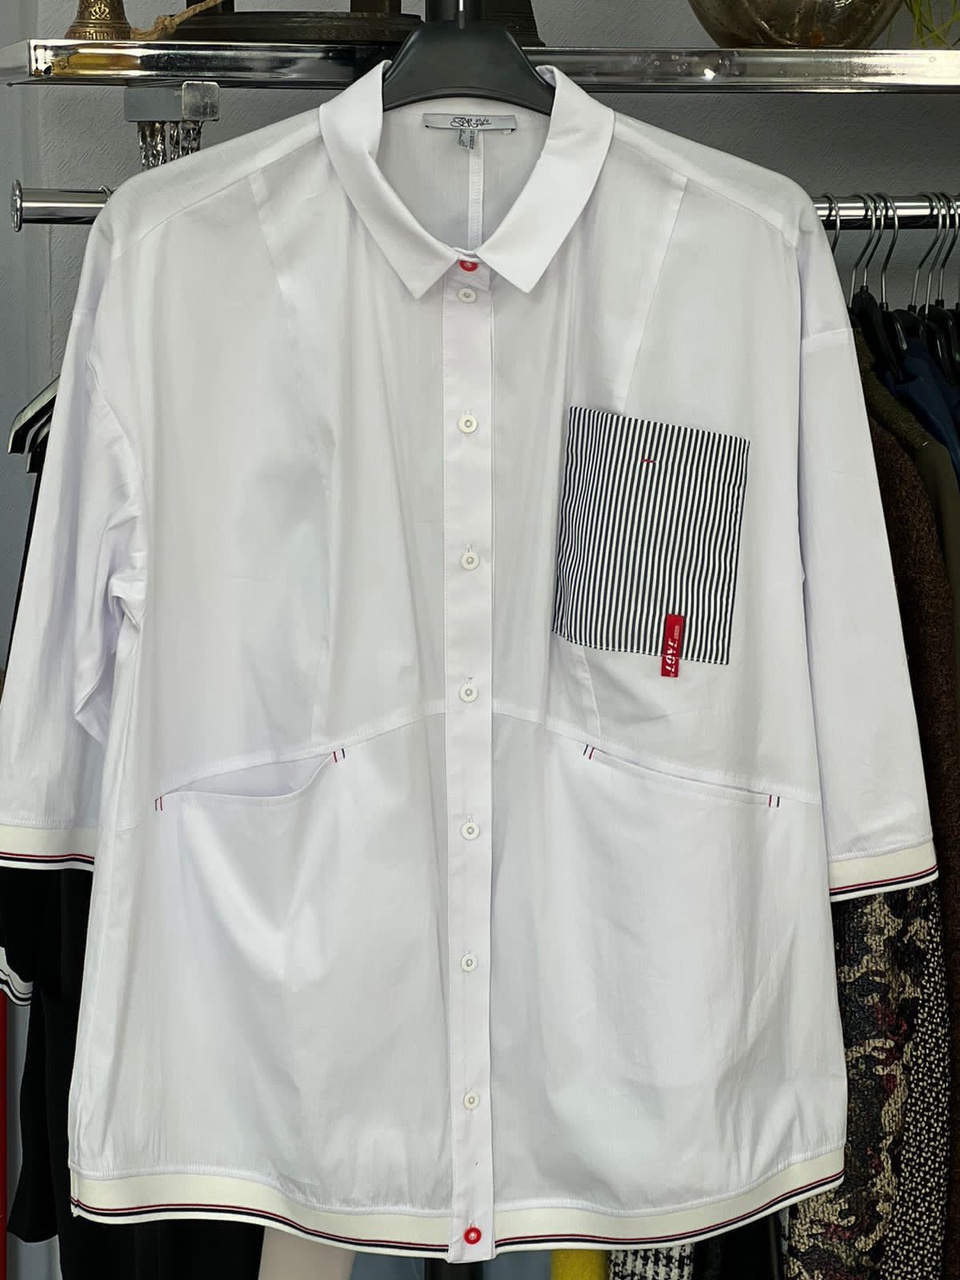 Рубашка - 5 900 ₽, заказать онлайн.